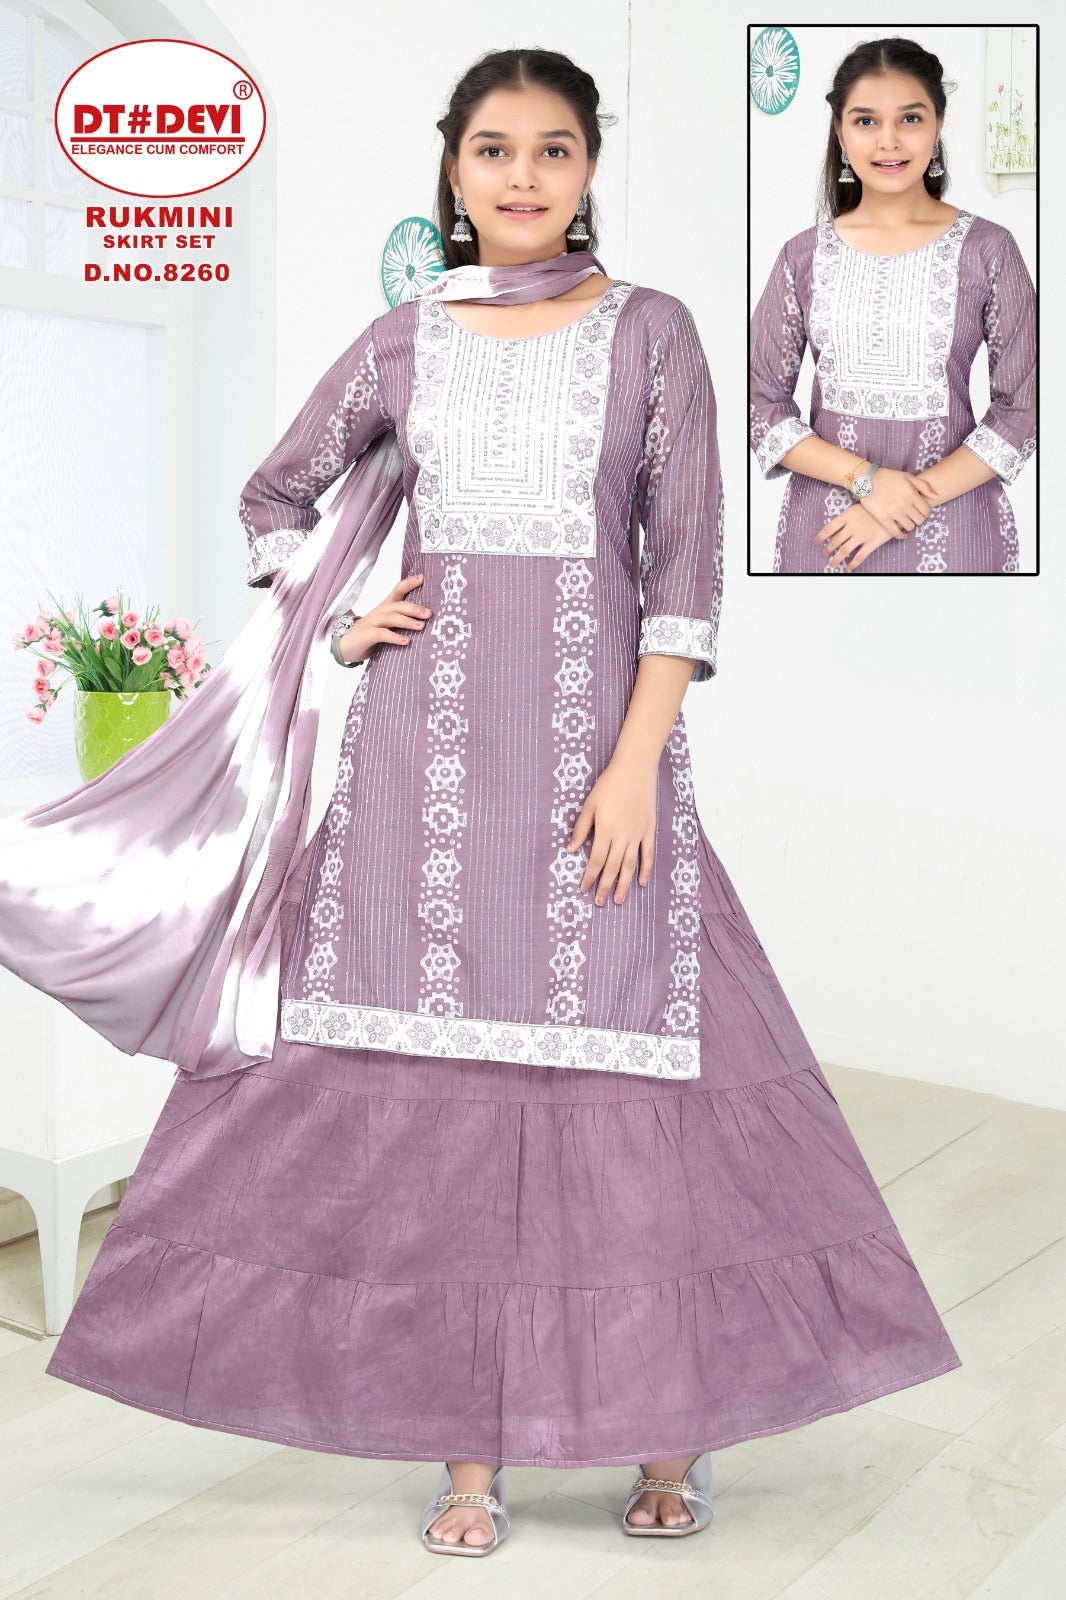 Rukmini-8260 Dt Devi Silk Readymade Skirt Style Suits